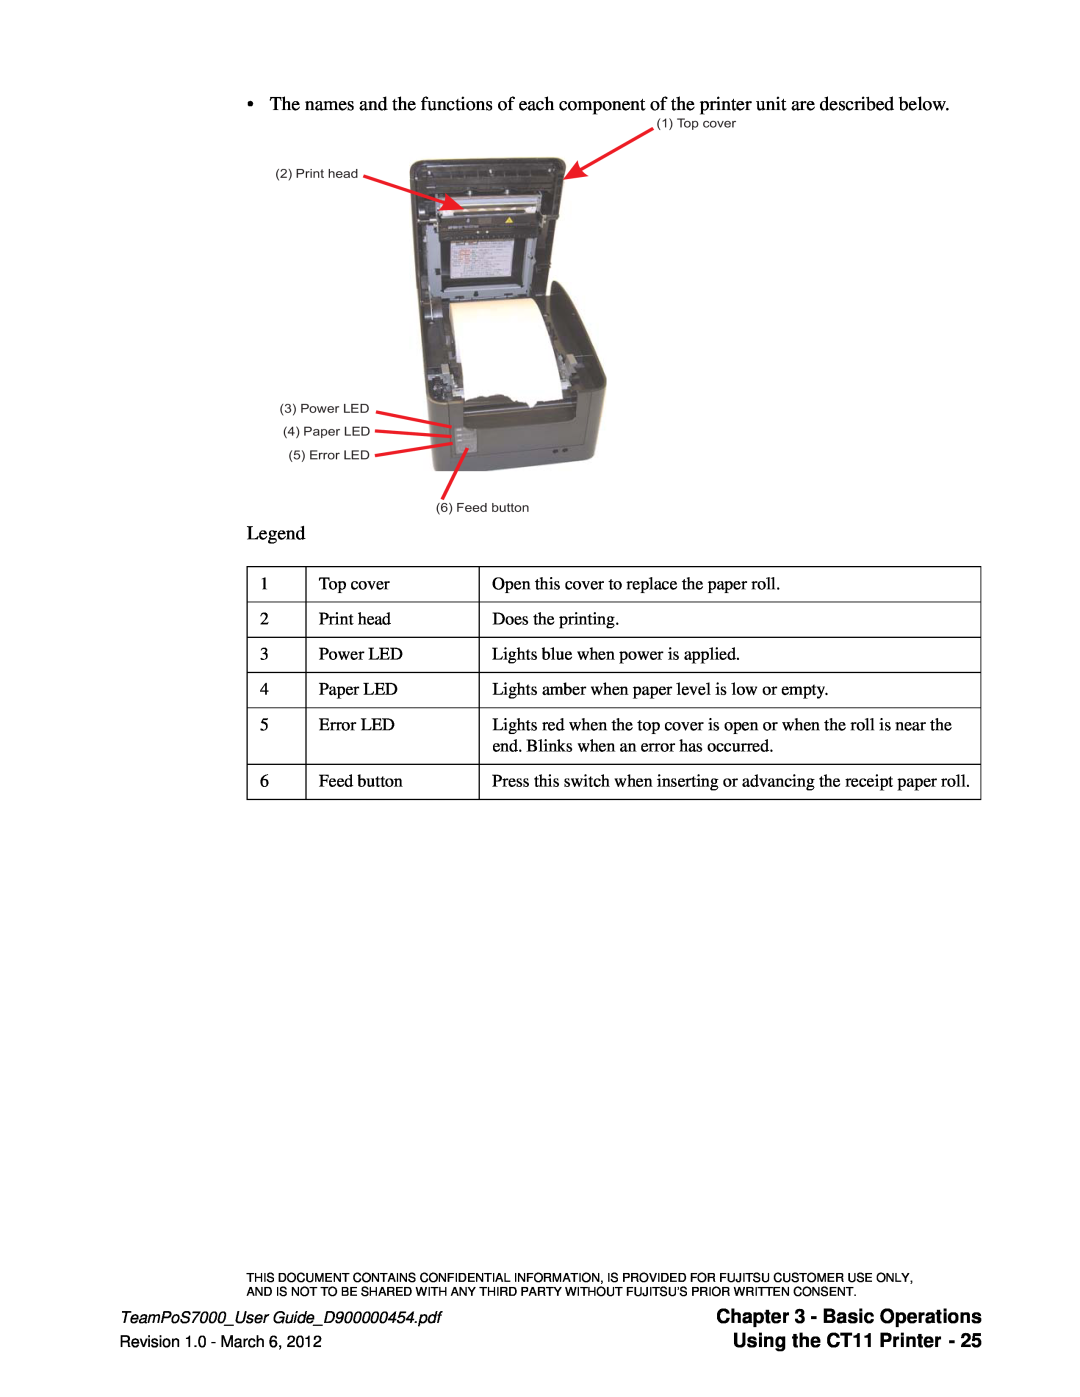 Fujitsu 7000 manual Using the CT11 Printer, Basic Operations 